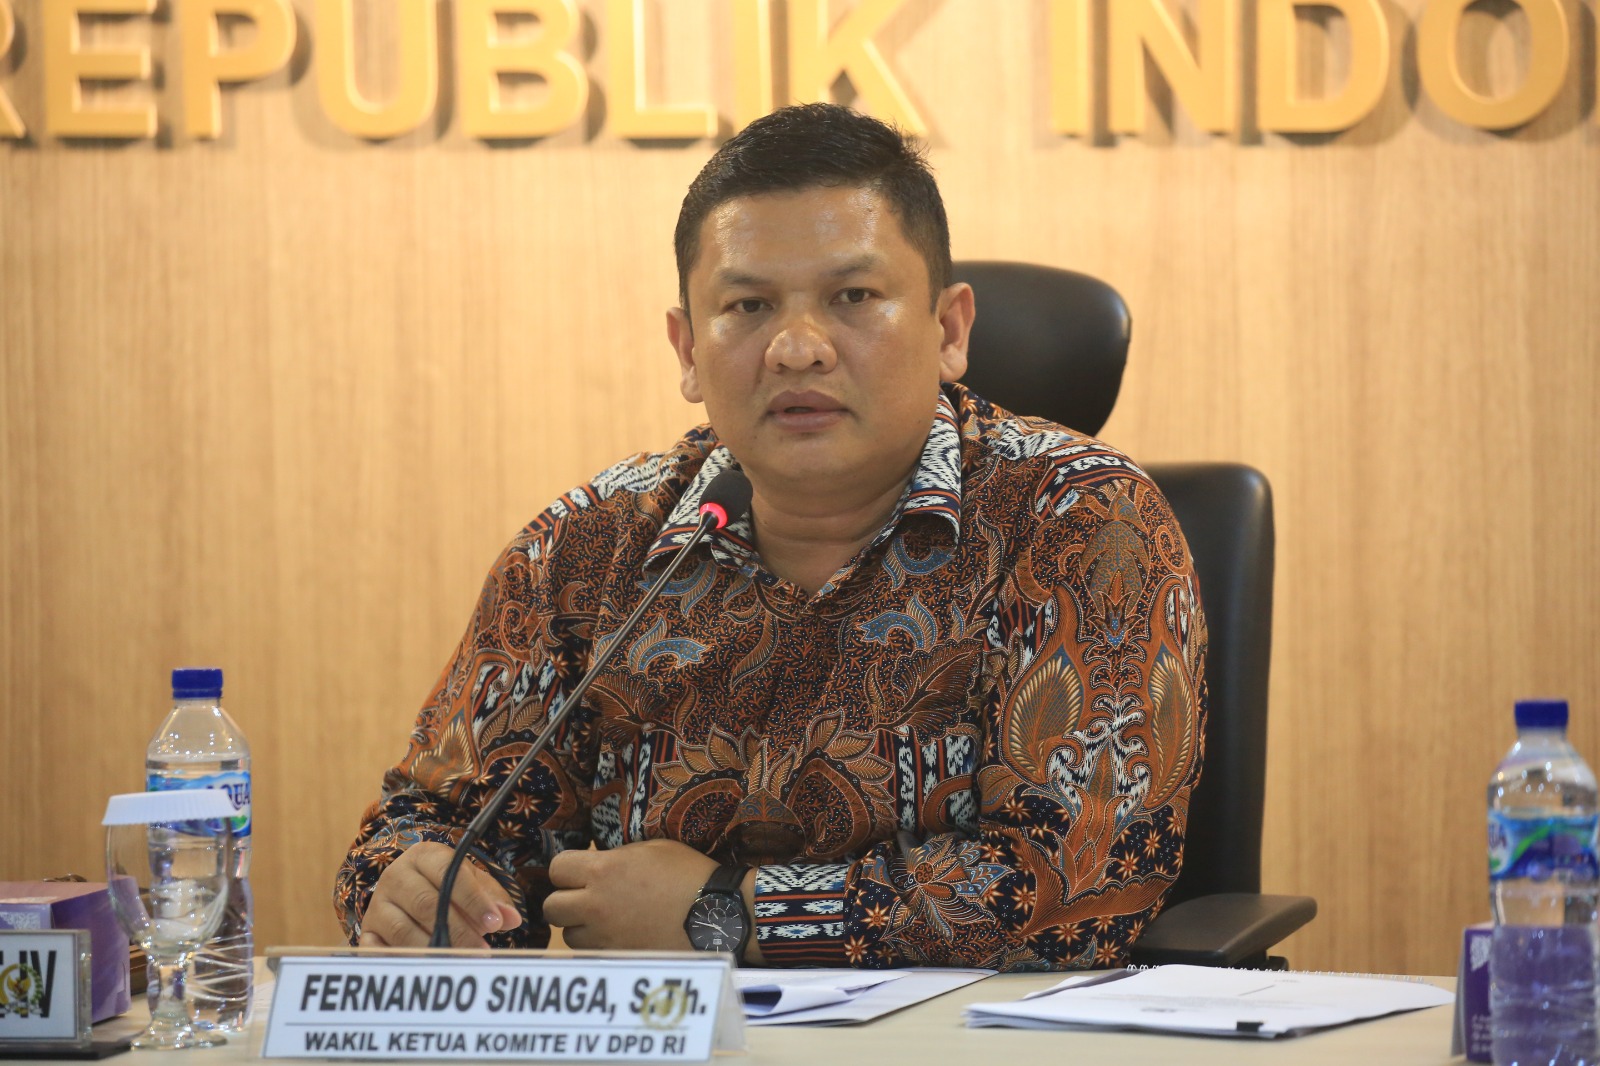 Wakil Ketua Komite IV DPD RI, Fernando Sinaga